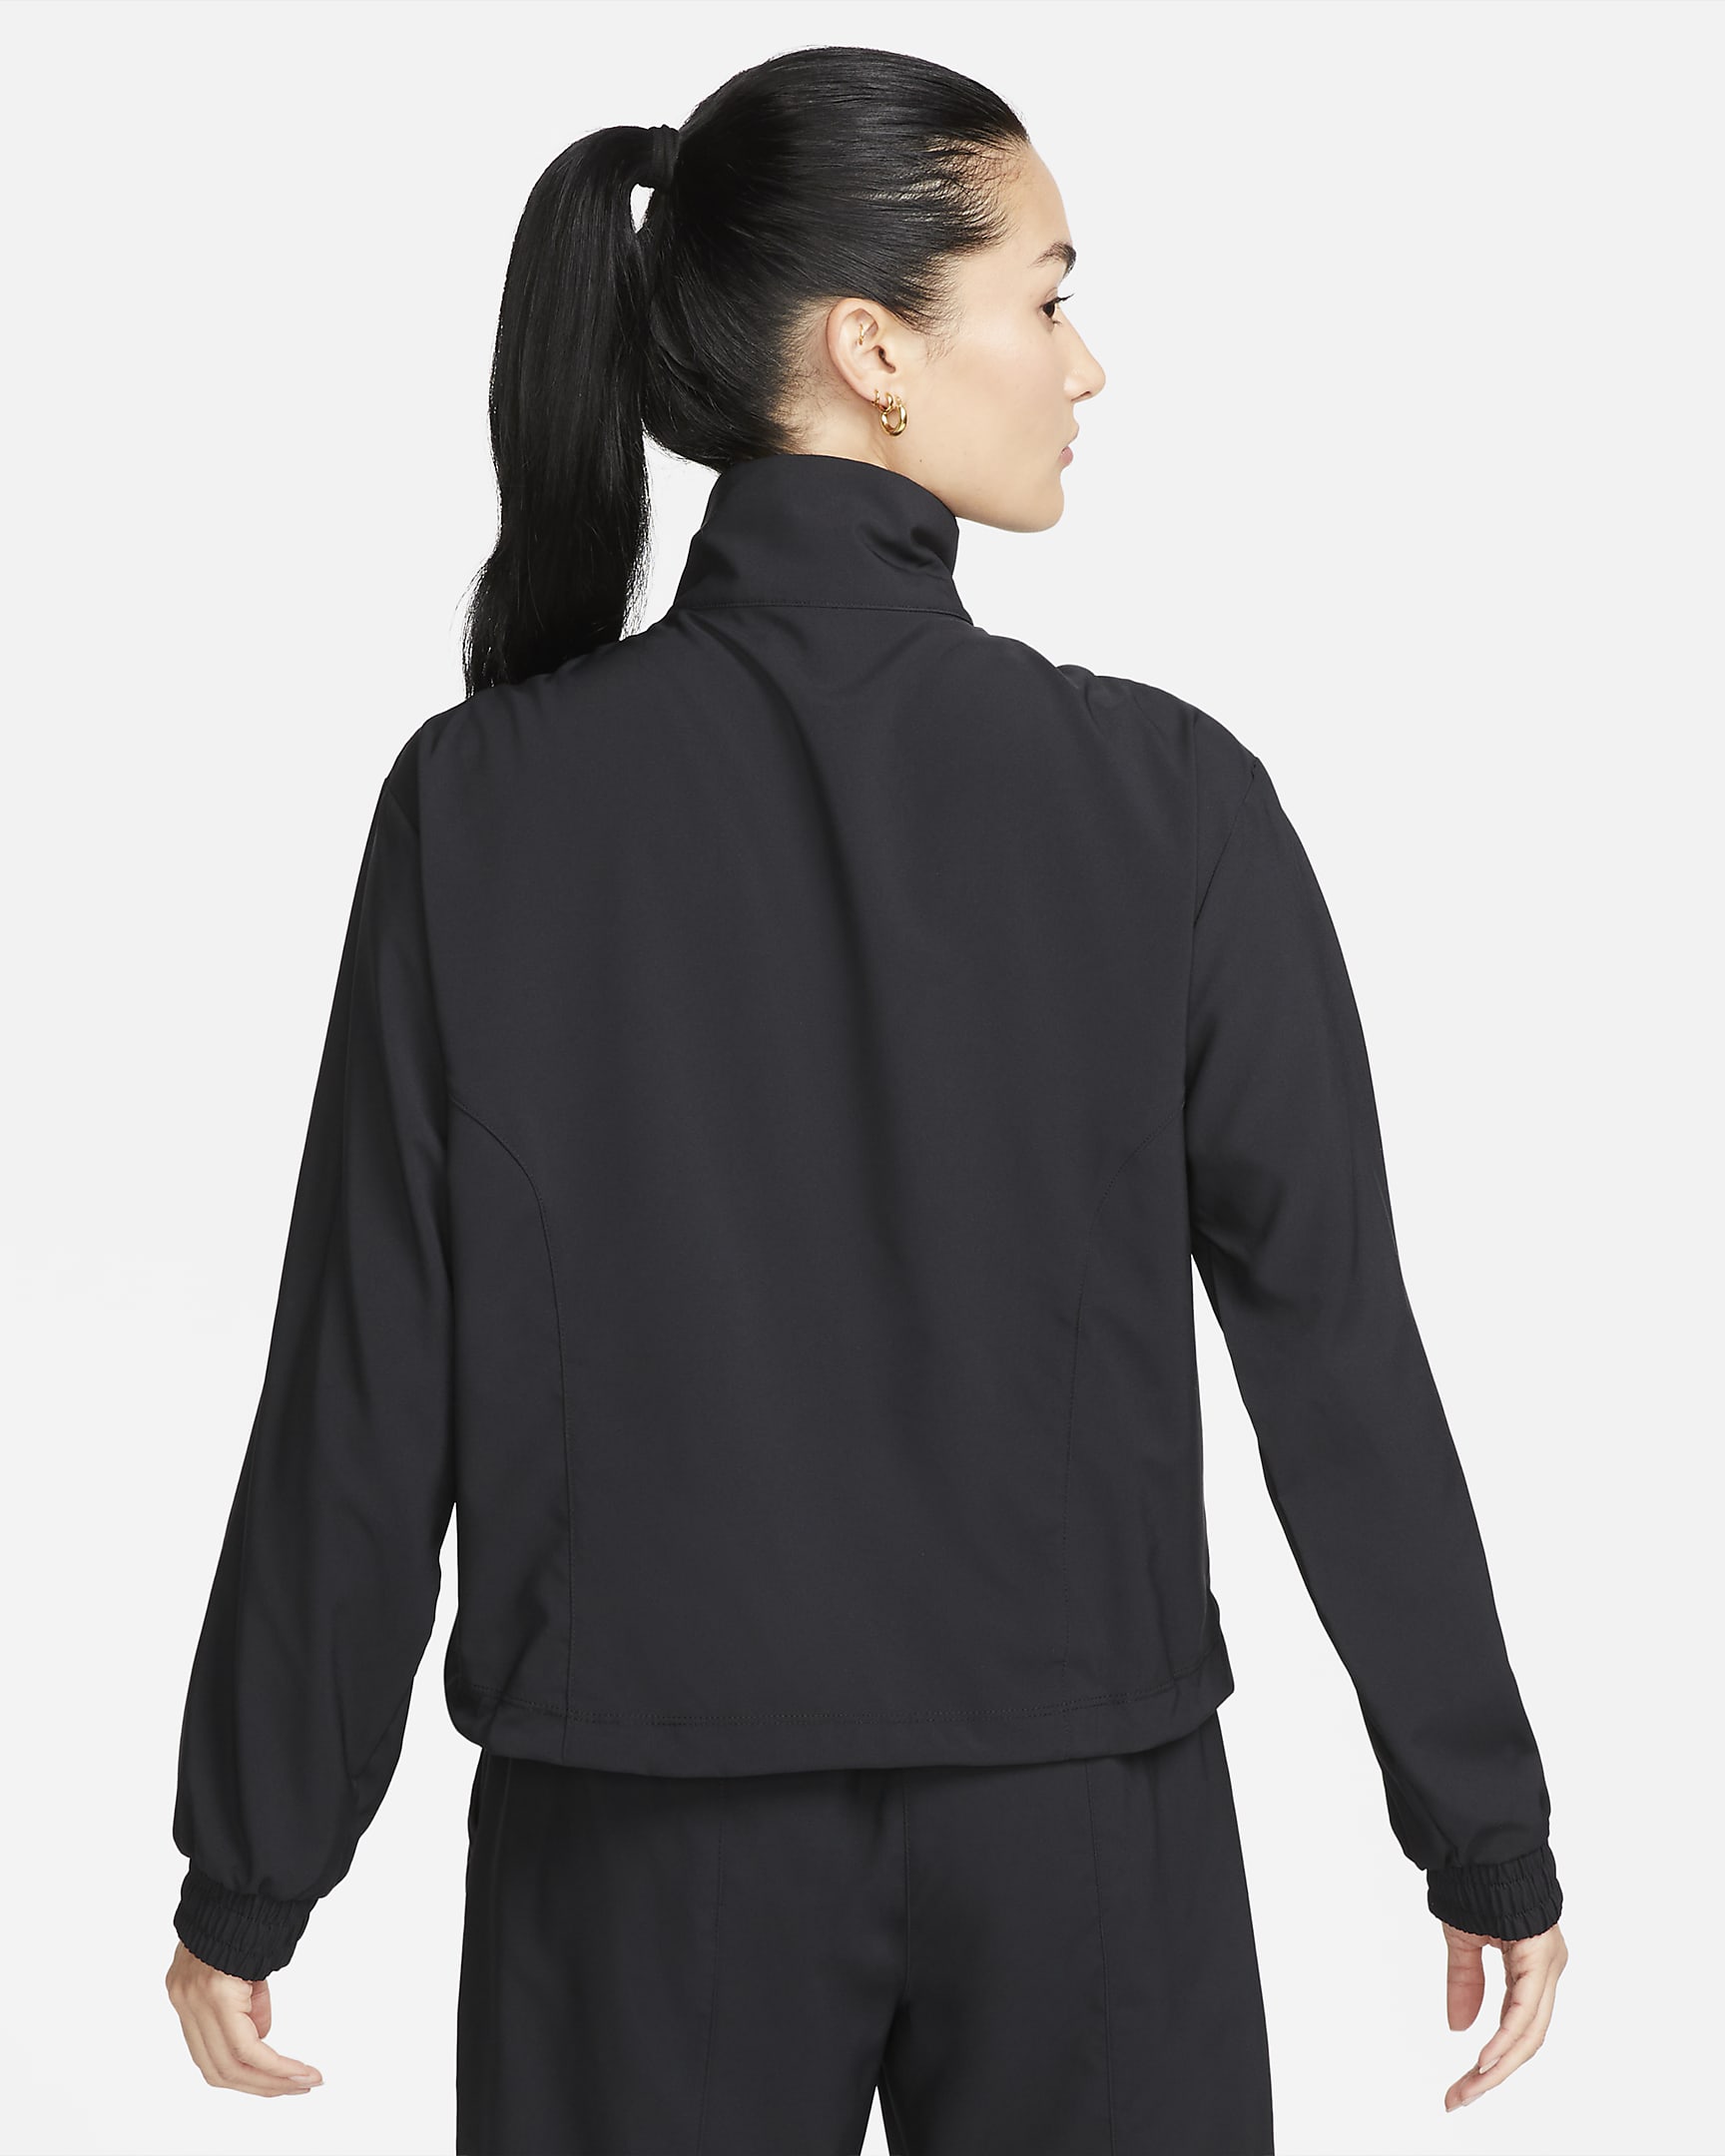 Nike Dri-FIT One Women's Jacket - Black/Black/White